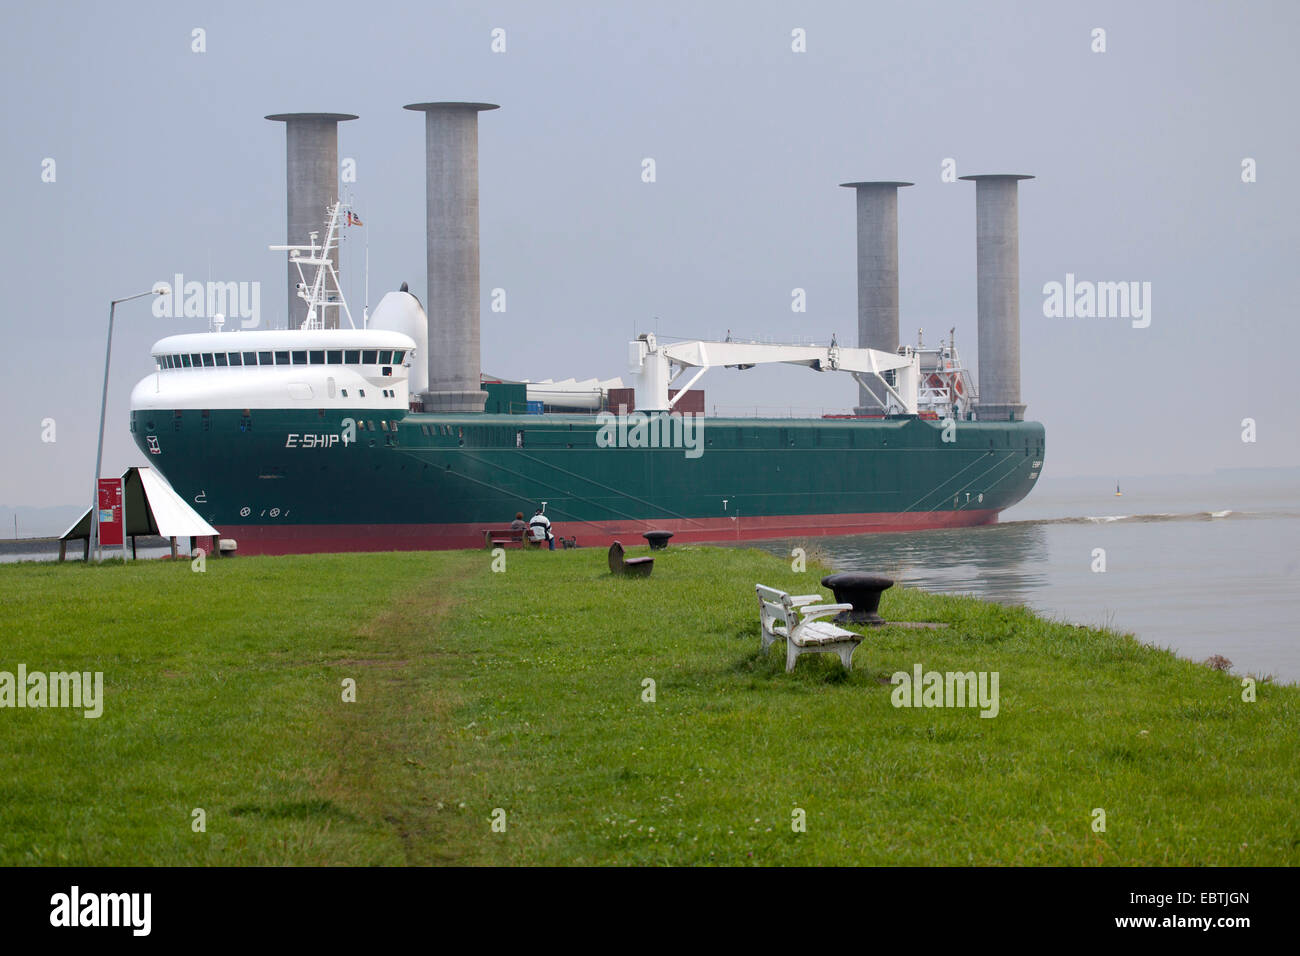 E-Ship 1 in the Emden harbour, Germany, Lower Saxony, East Frisia, Emden Stock Photo